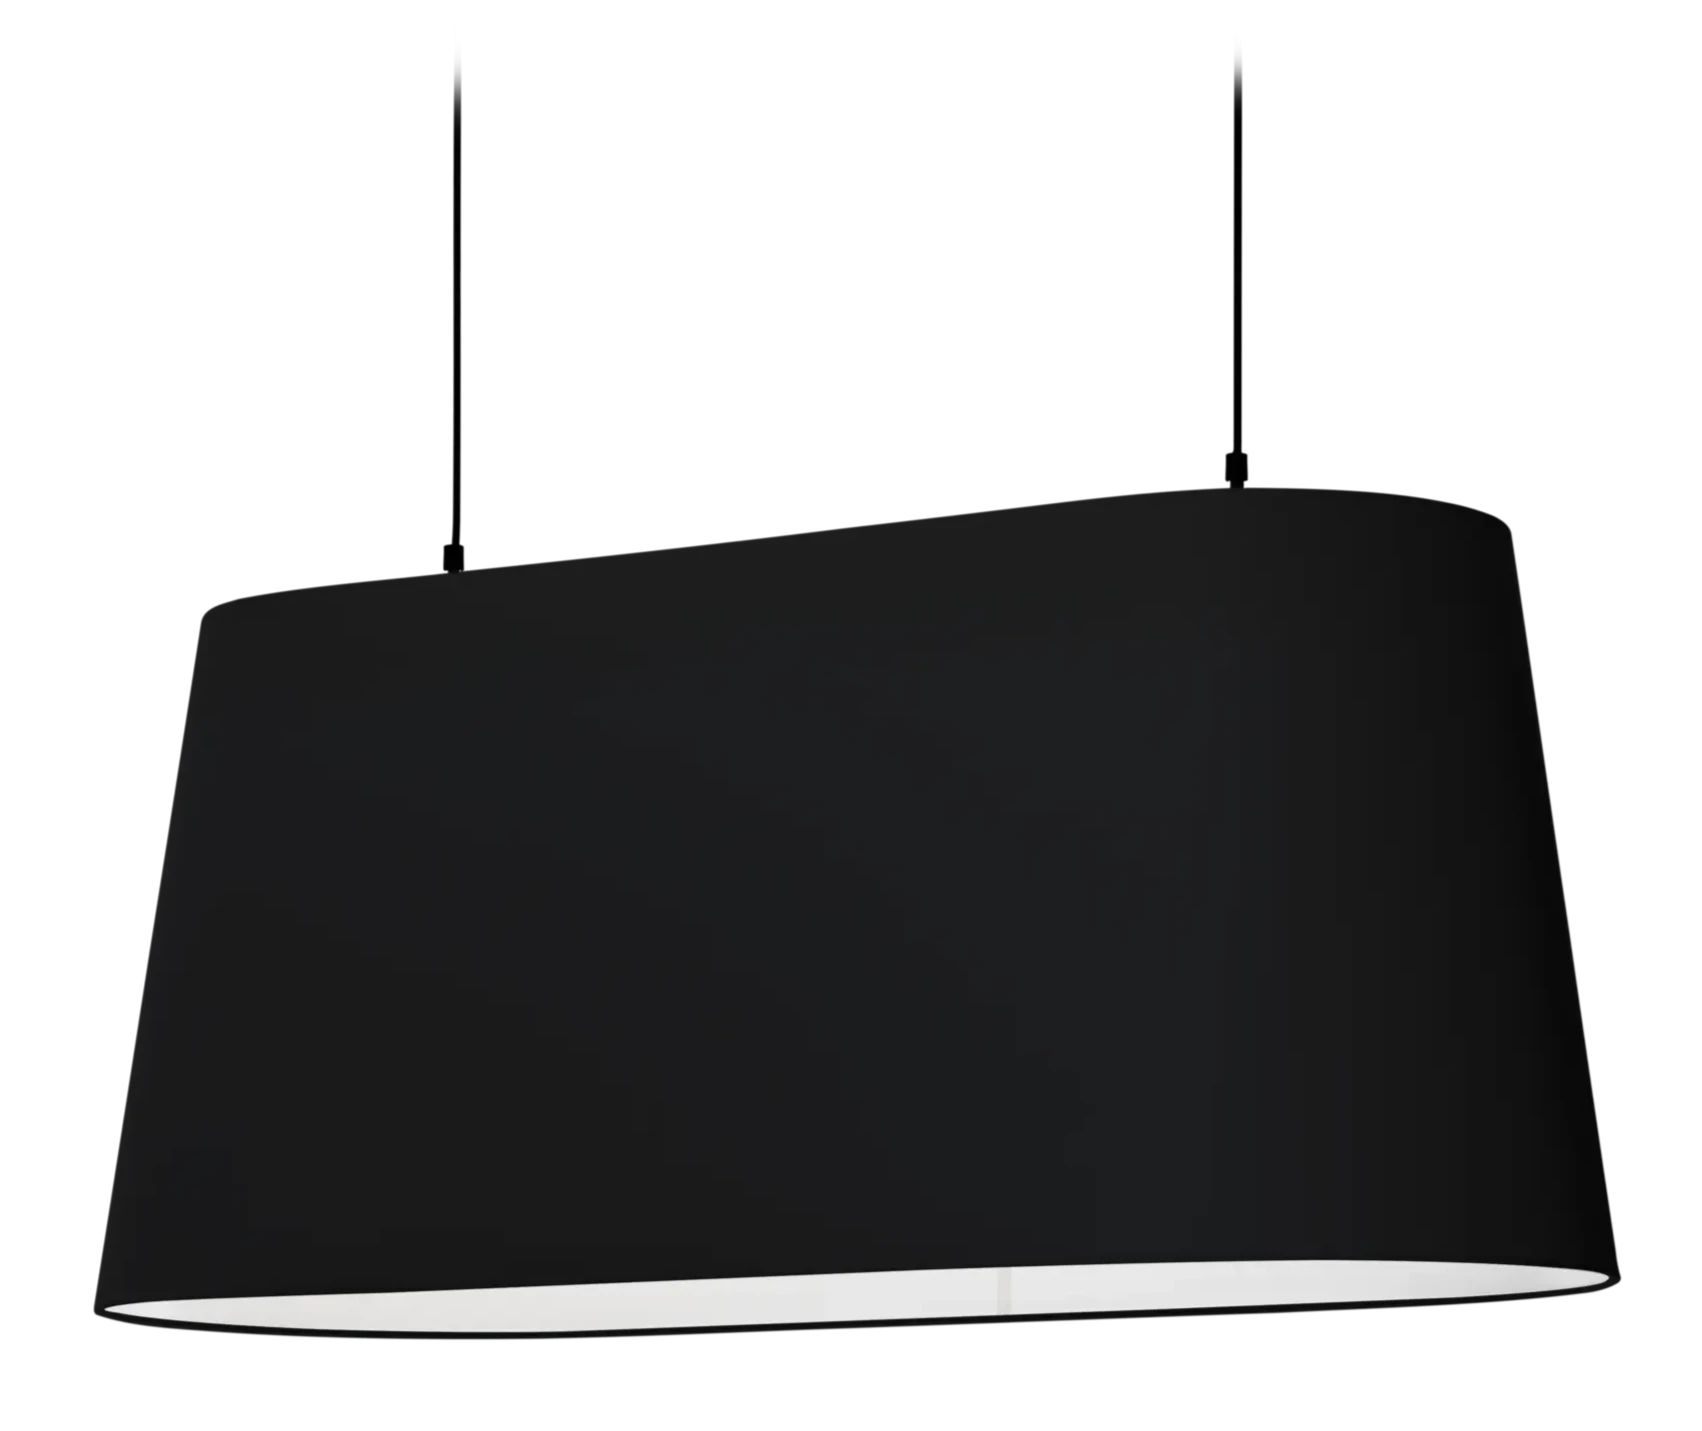 Oval Light Suspension Lamp